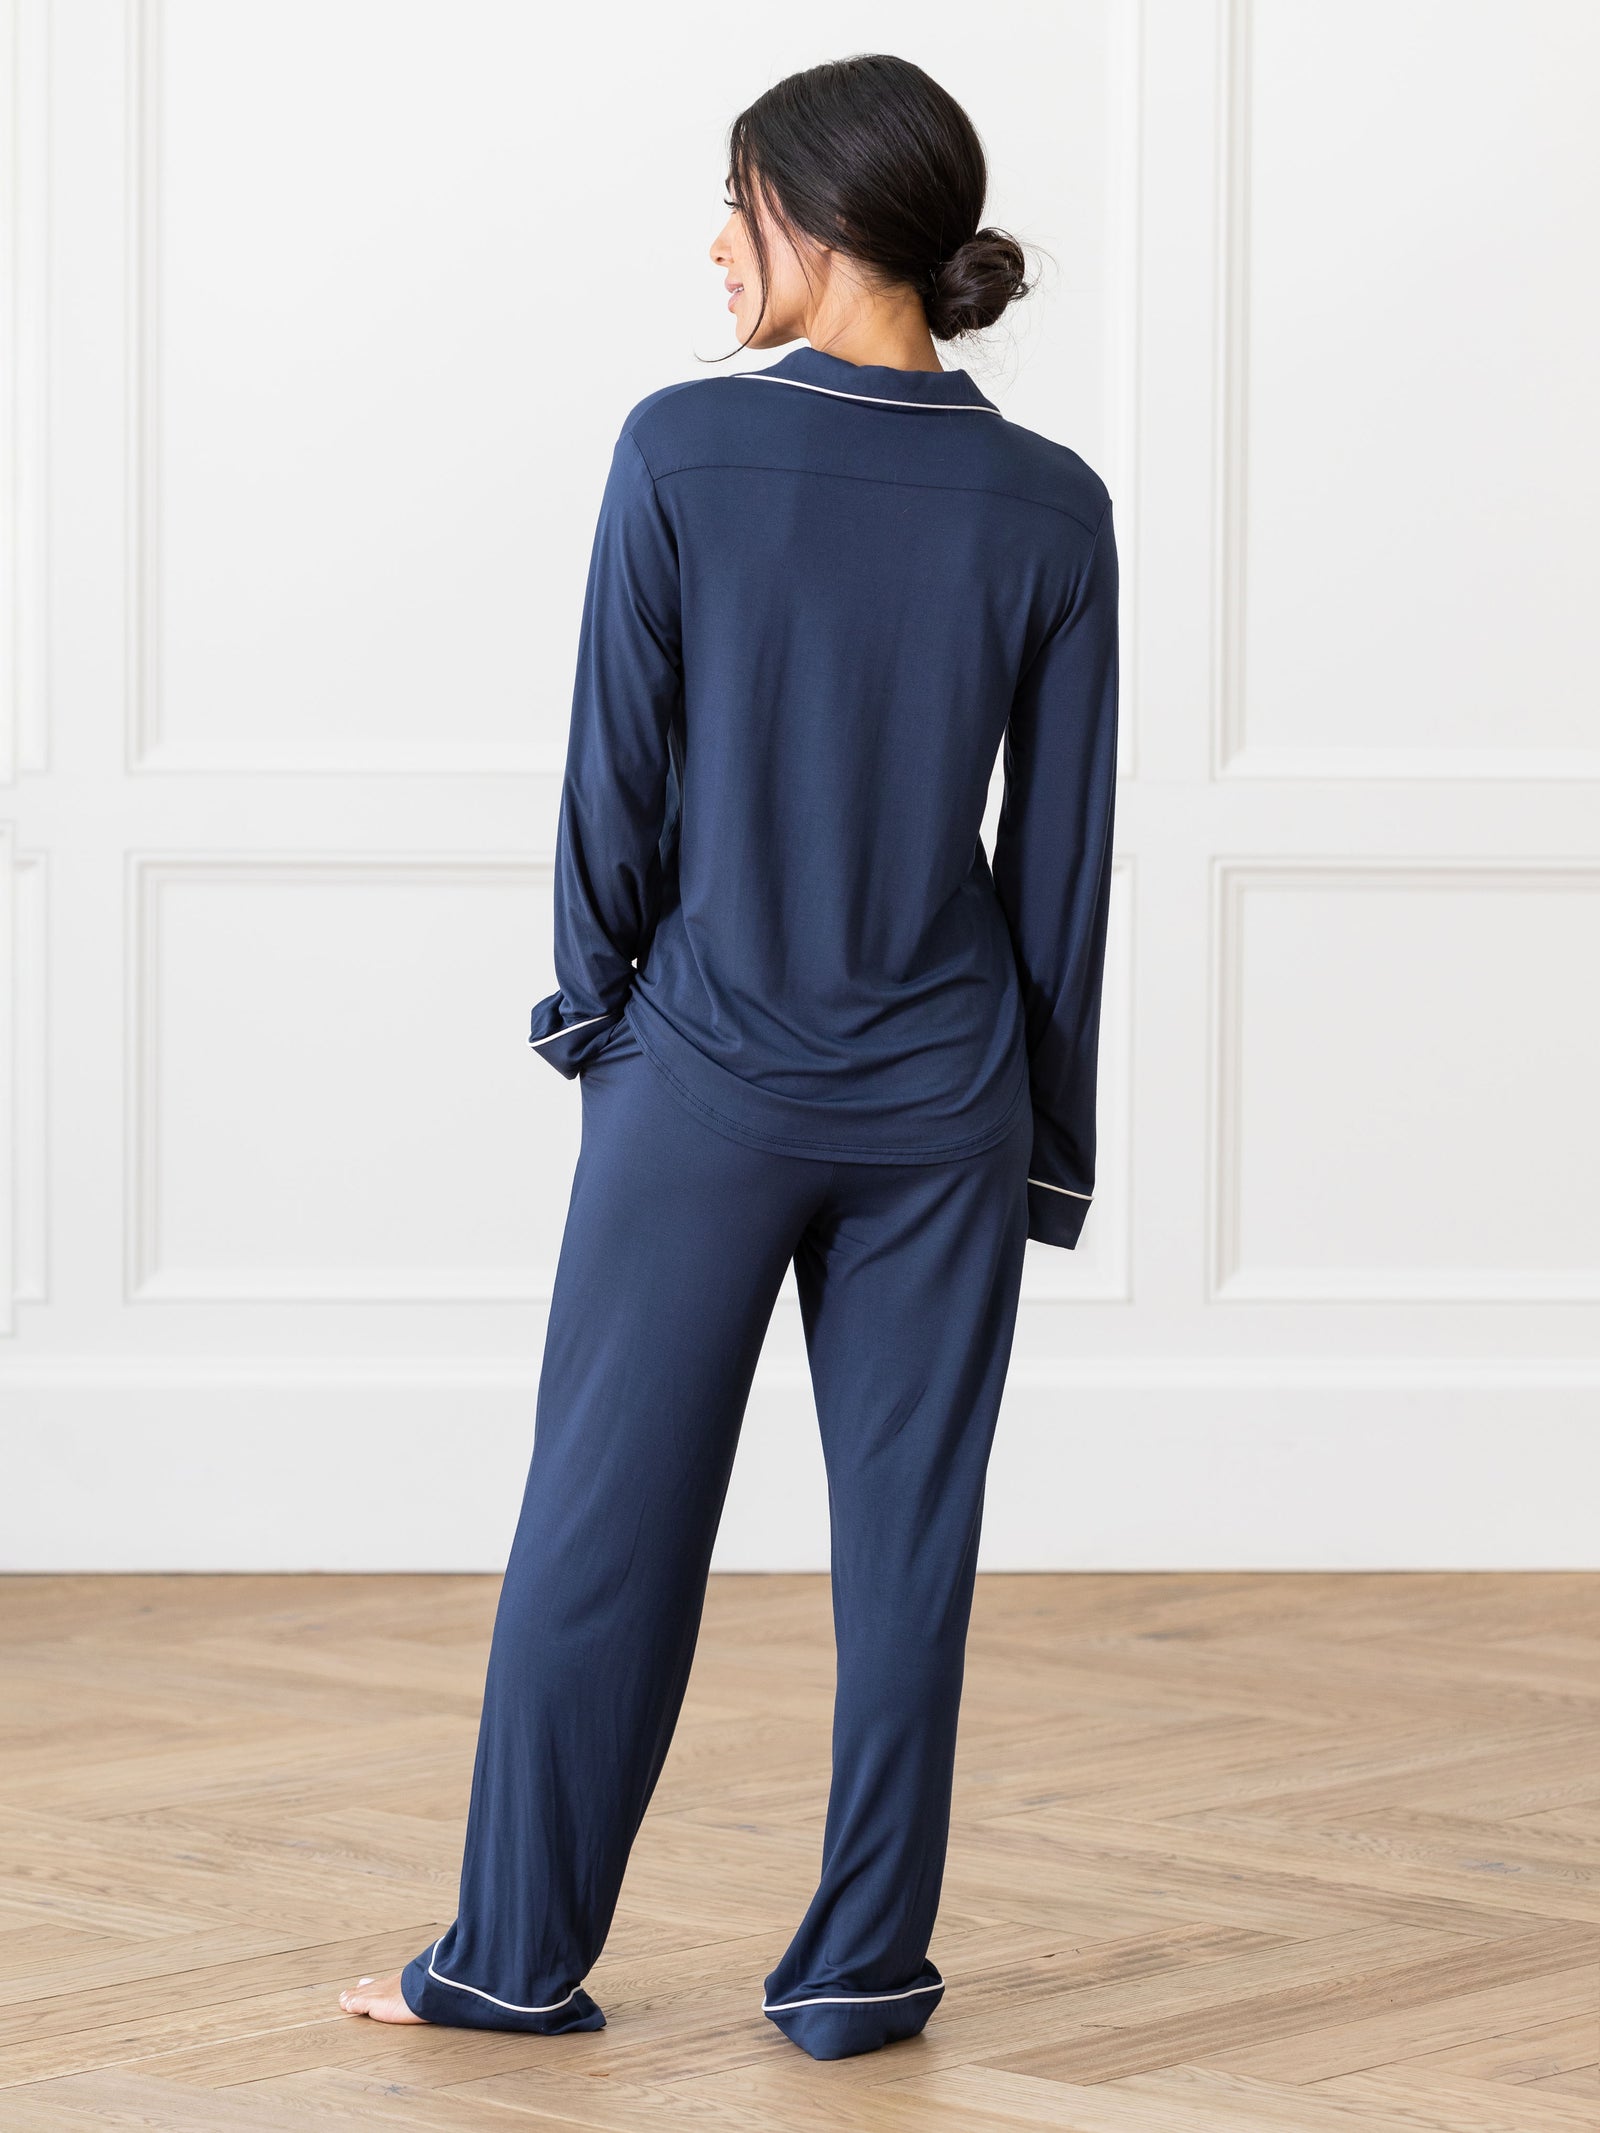 Bamboo Pajama Loungewear Set, Natural Sleepwear With Long Sleeved